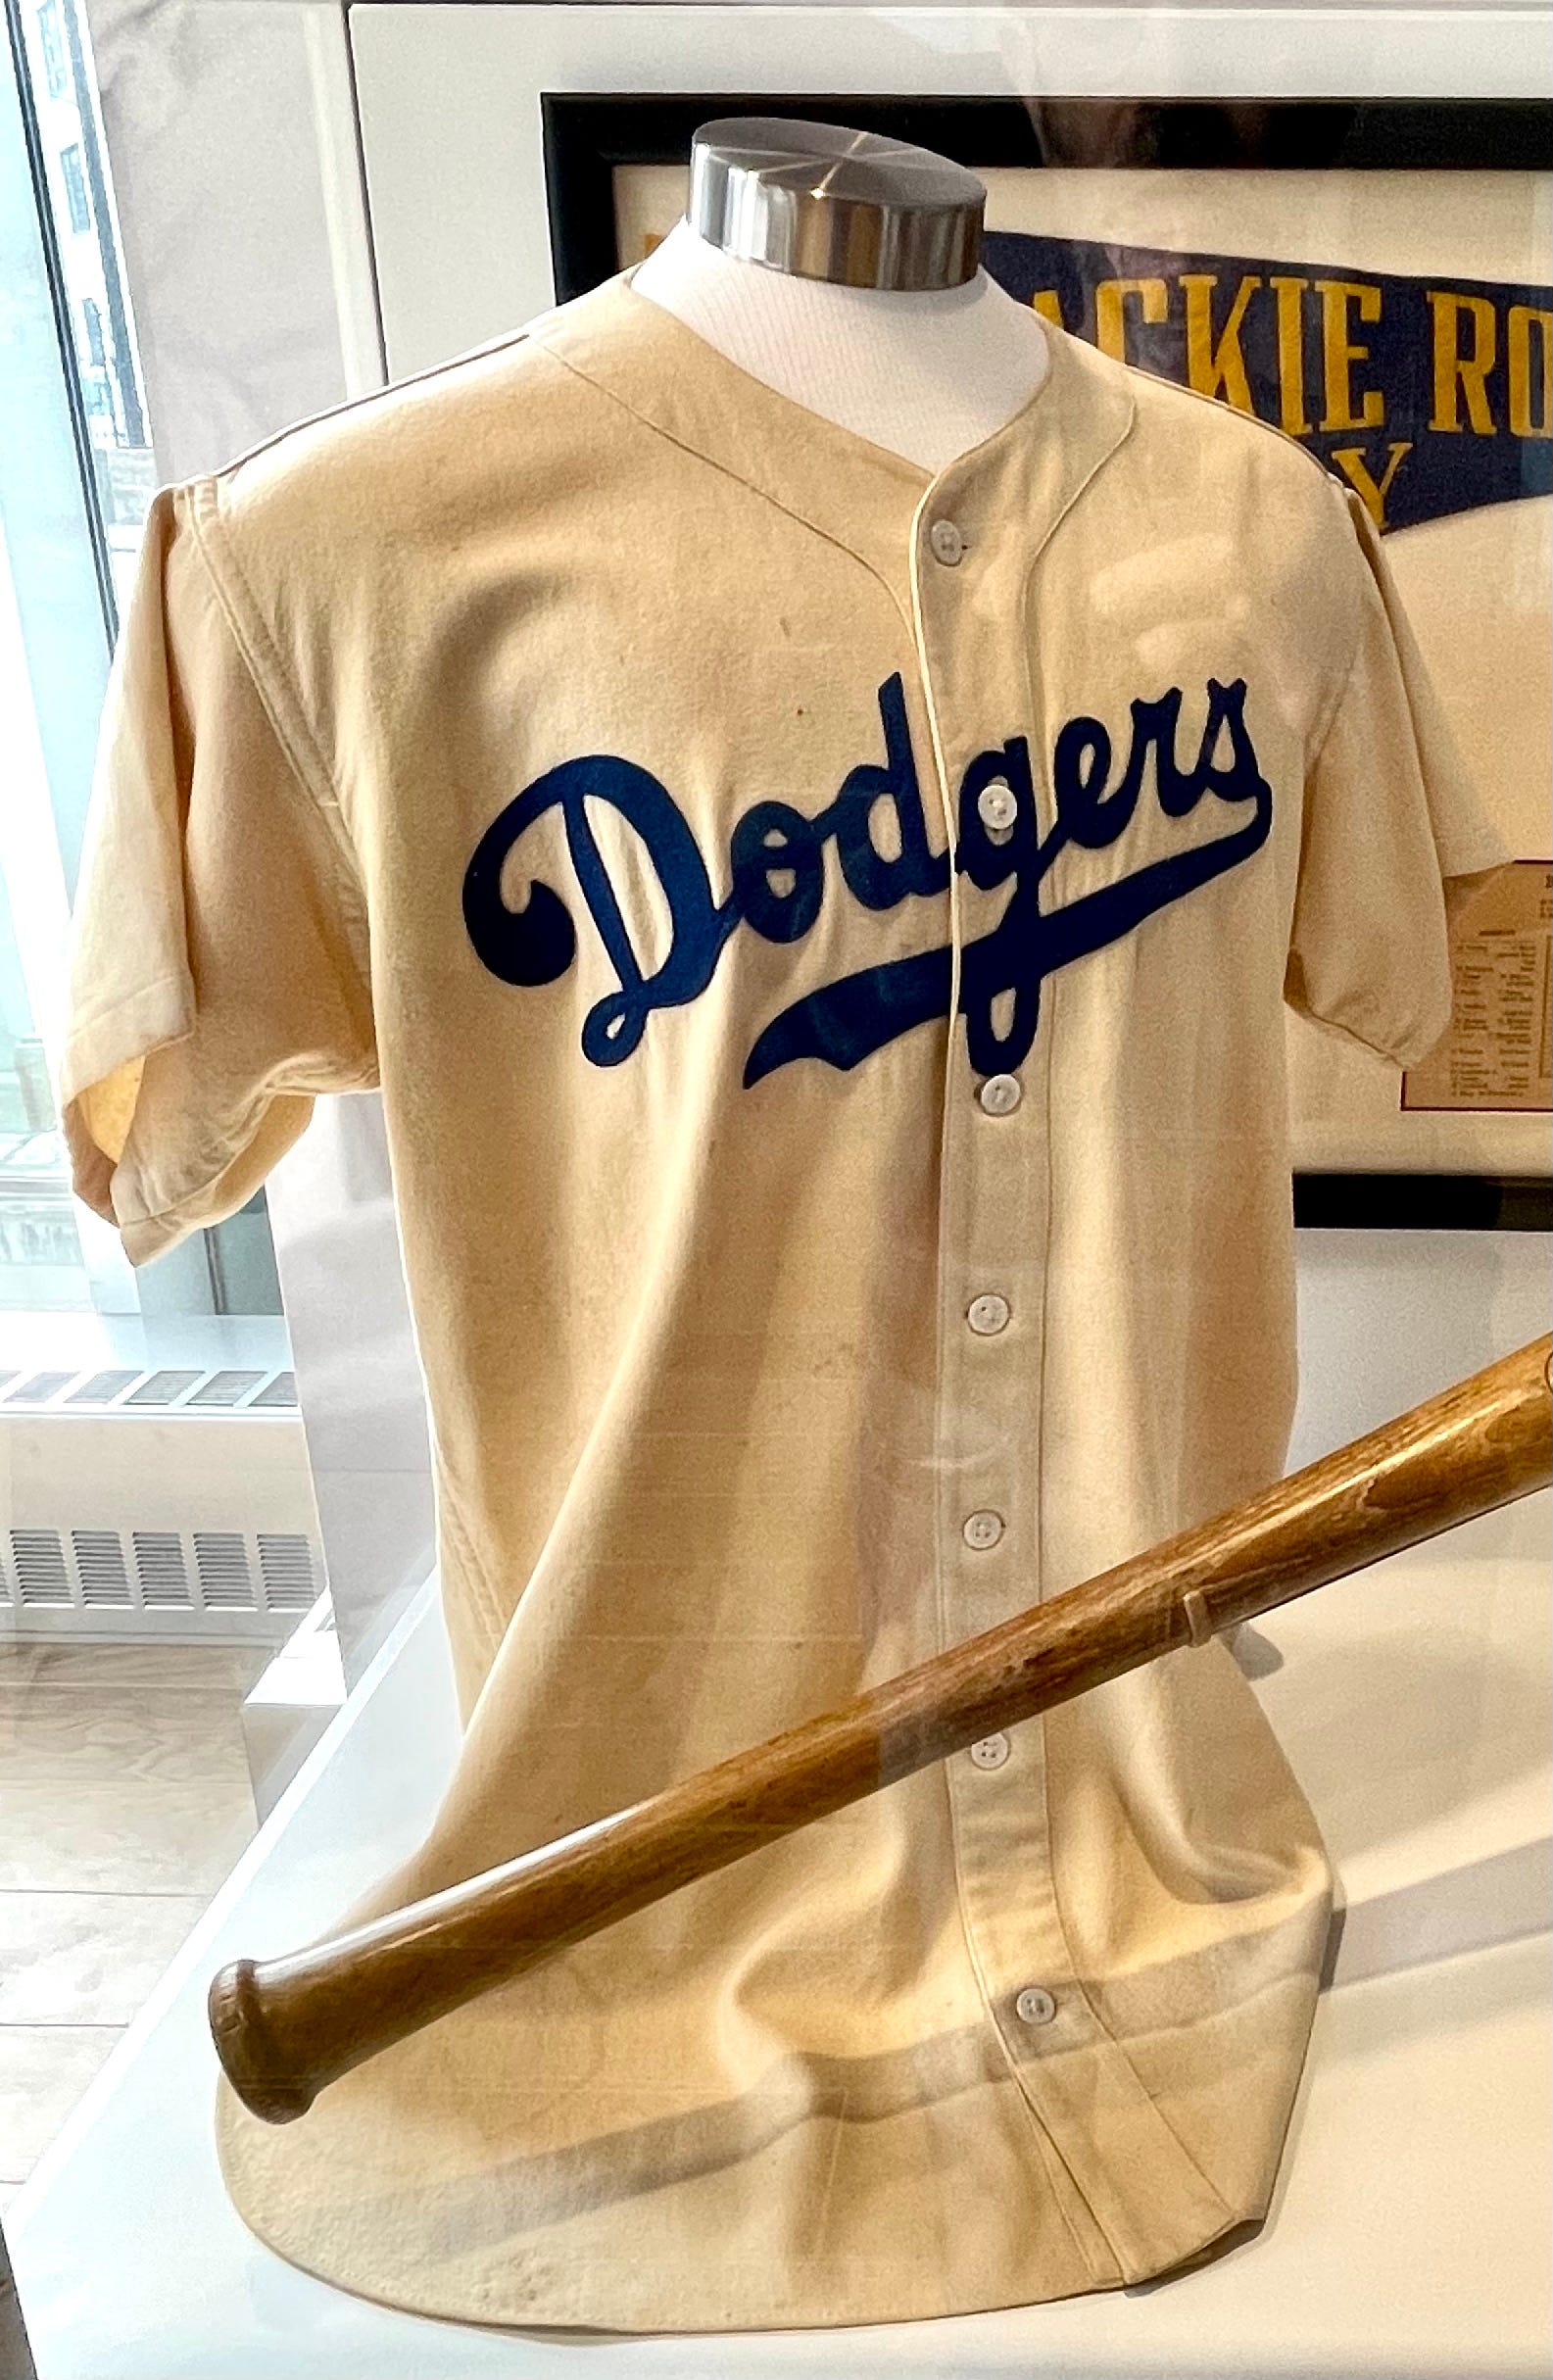 Jackie Robinson in his Brooklyn Dodgers Uniform